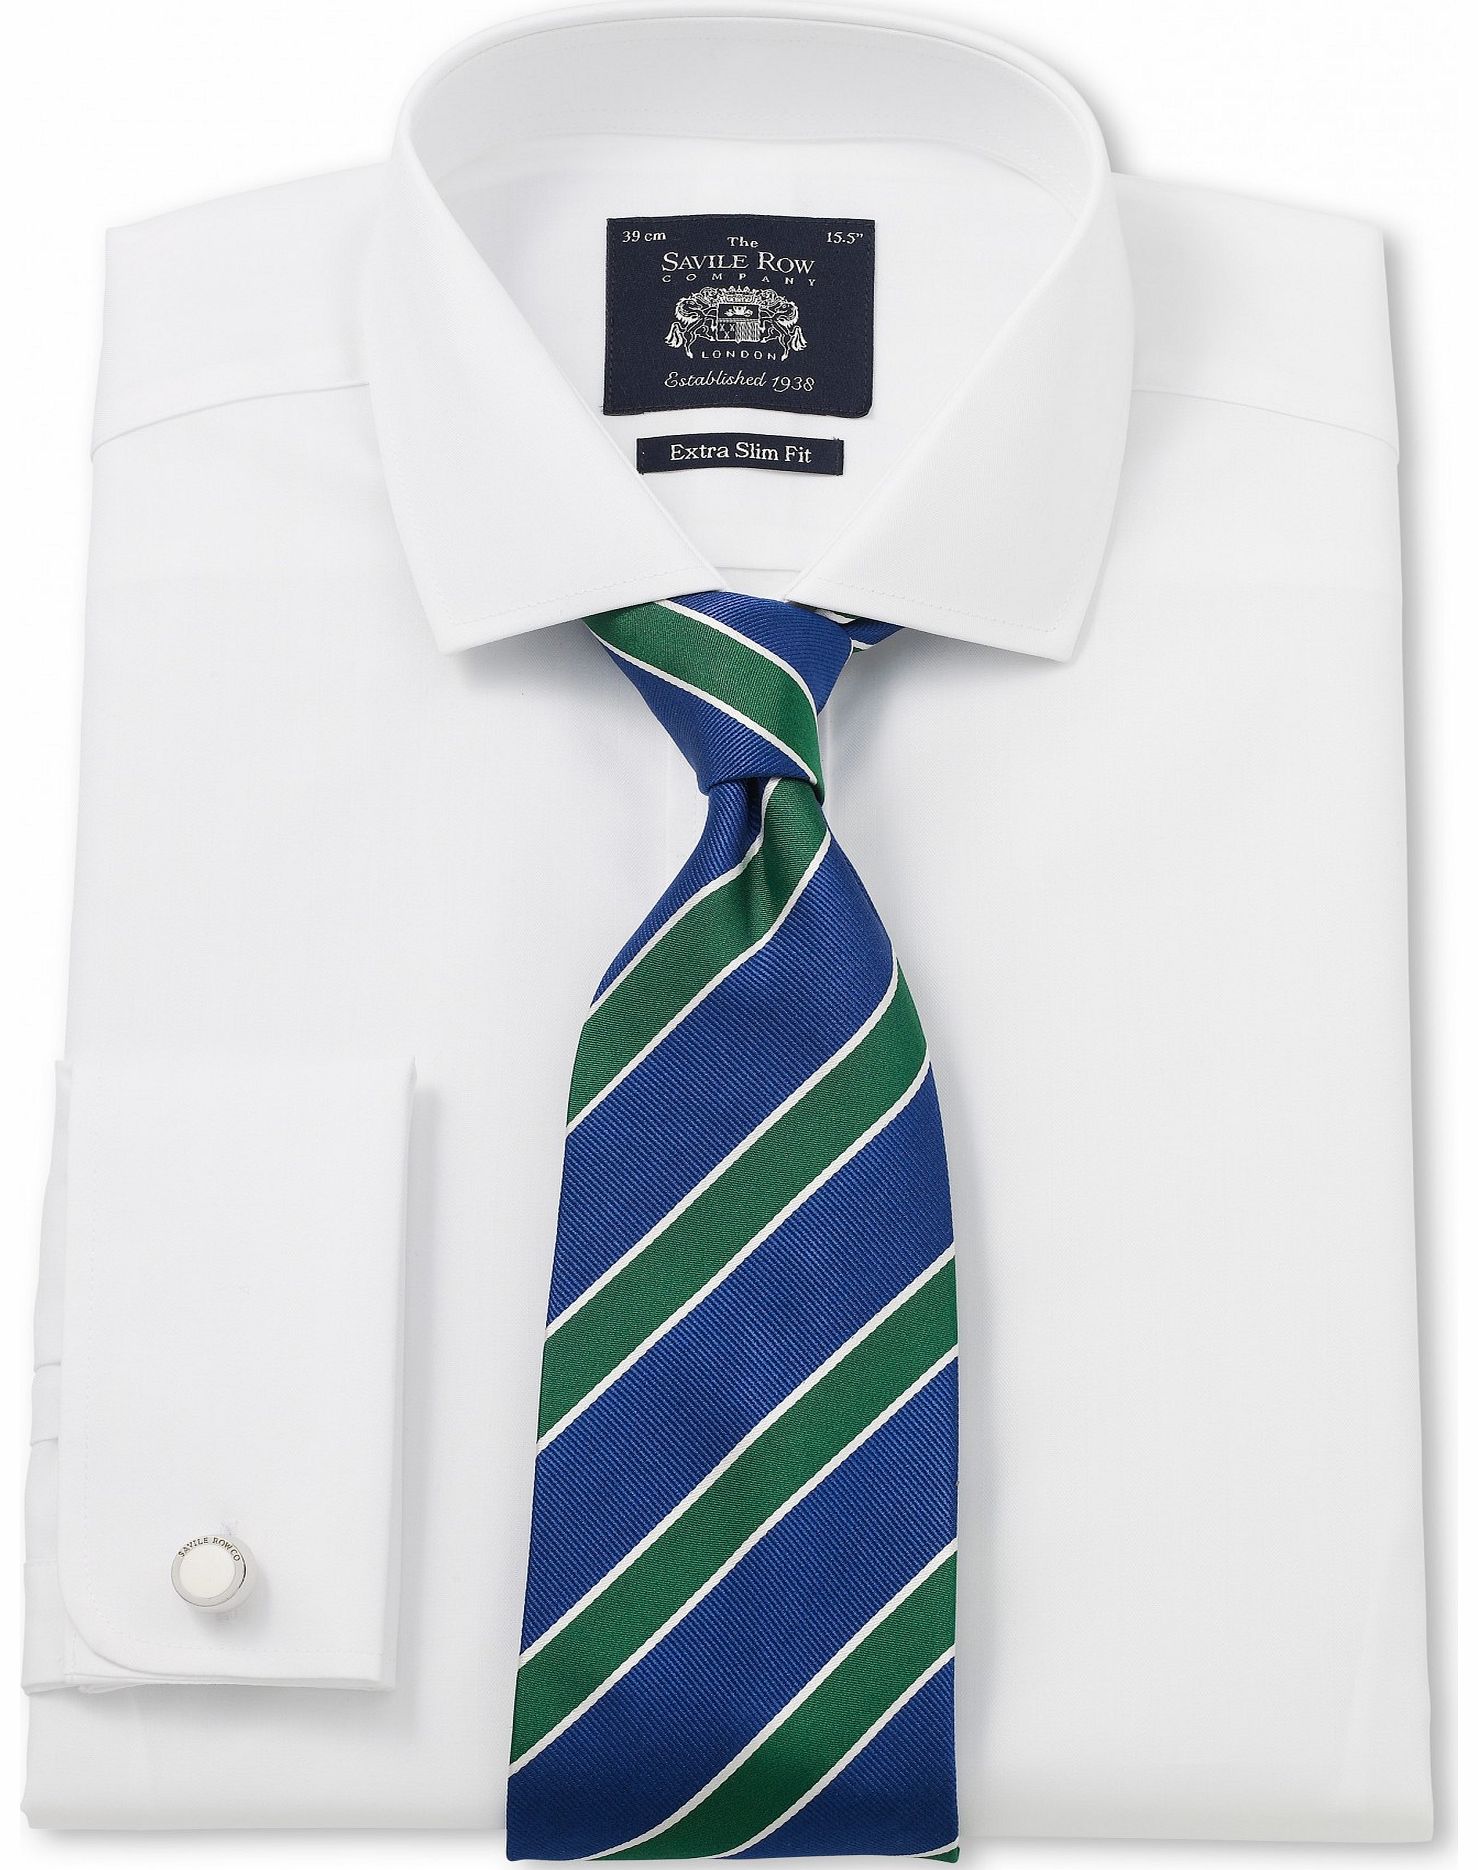 Savile Row Company White Luxury Herringbone Extra Slim Fit Shirt 16